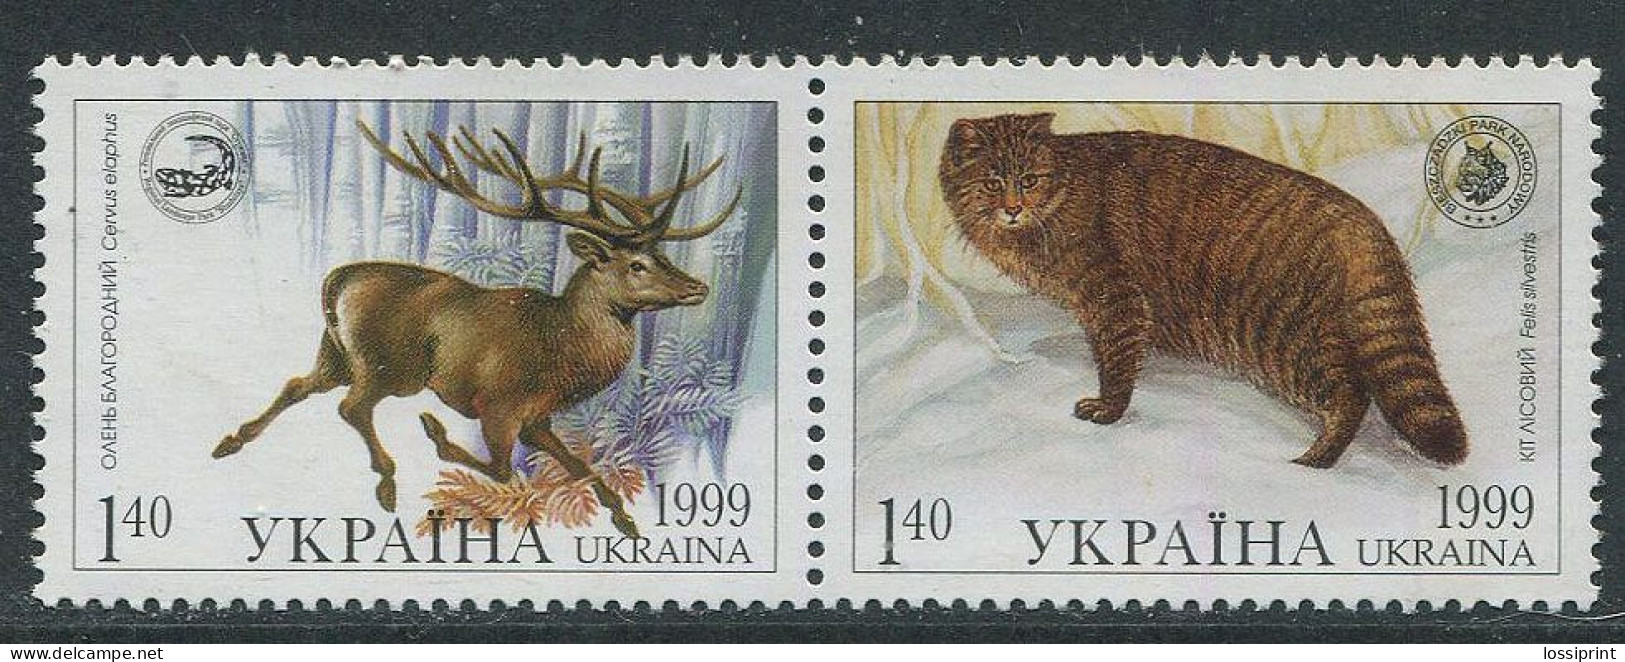 Ukraine:Ukraina:Unused Stamps Pair Deer And Wild Cat, Joint Issue, 1999, MNH - Ukraine